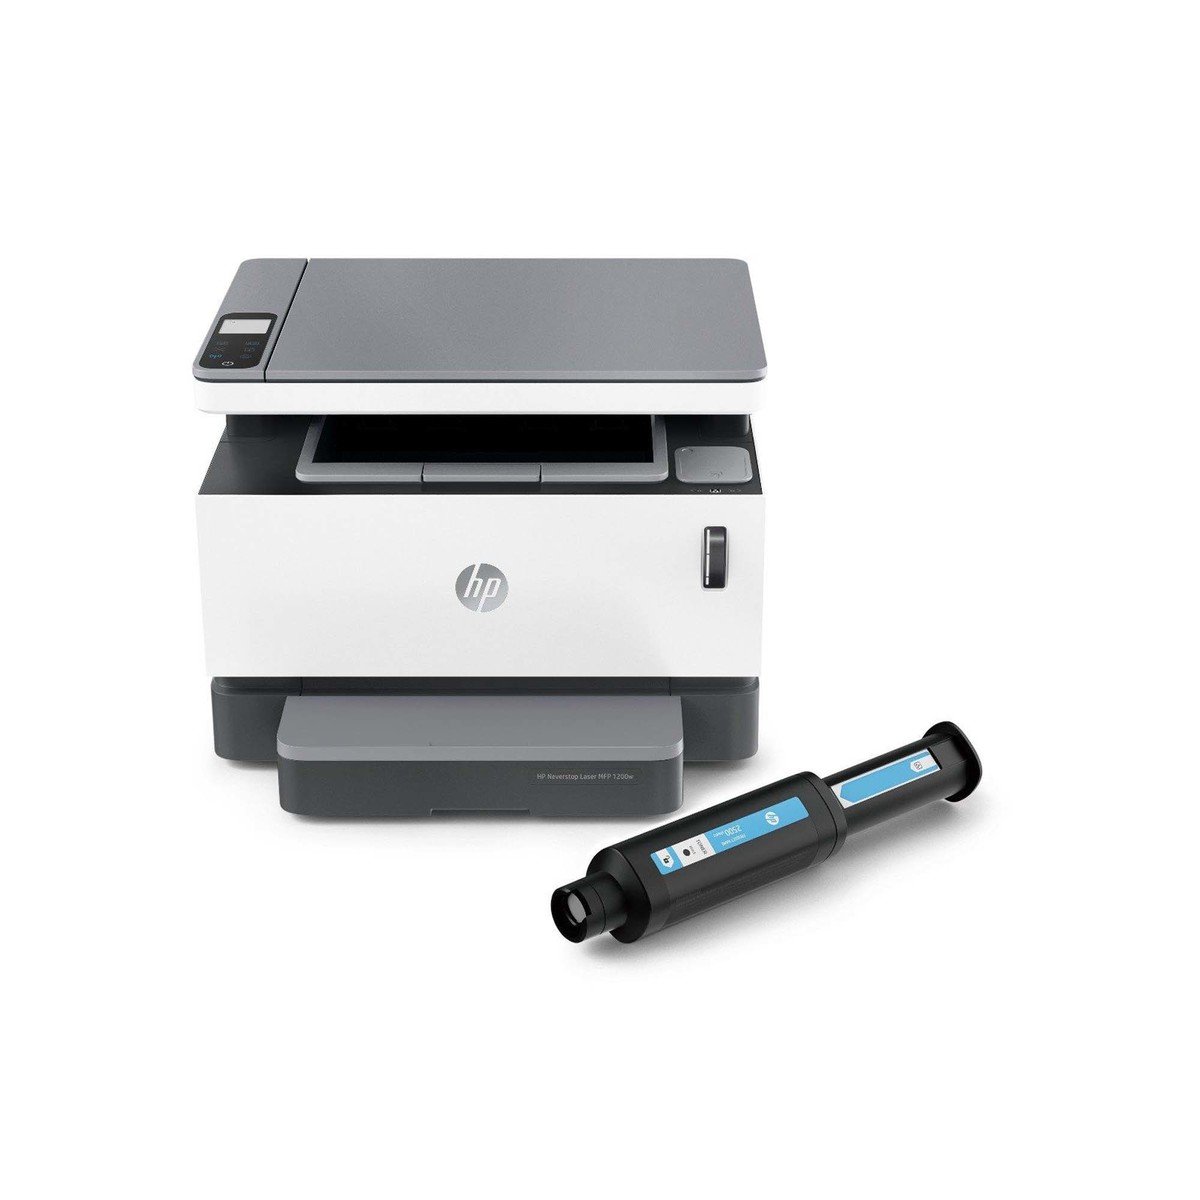 HP Neverstop Laser MFP 1200w Printer (4RY26A),White